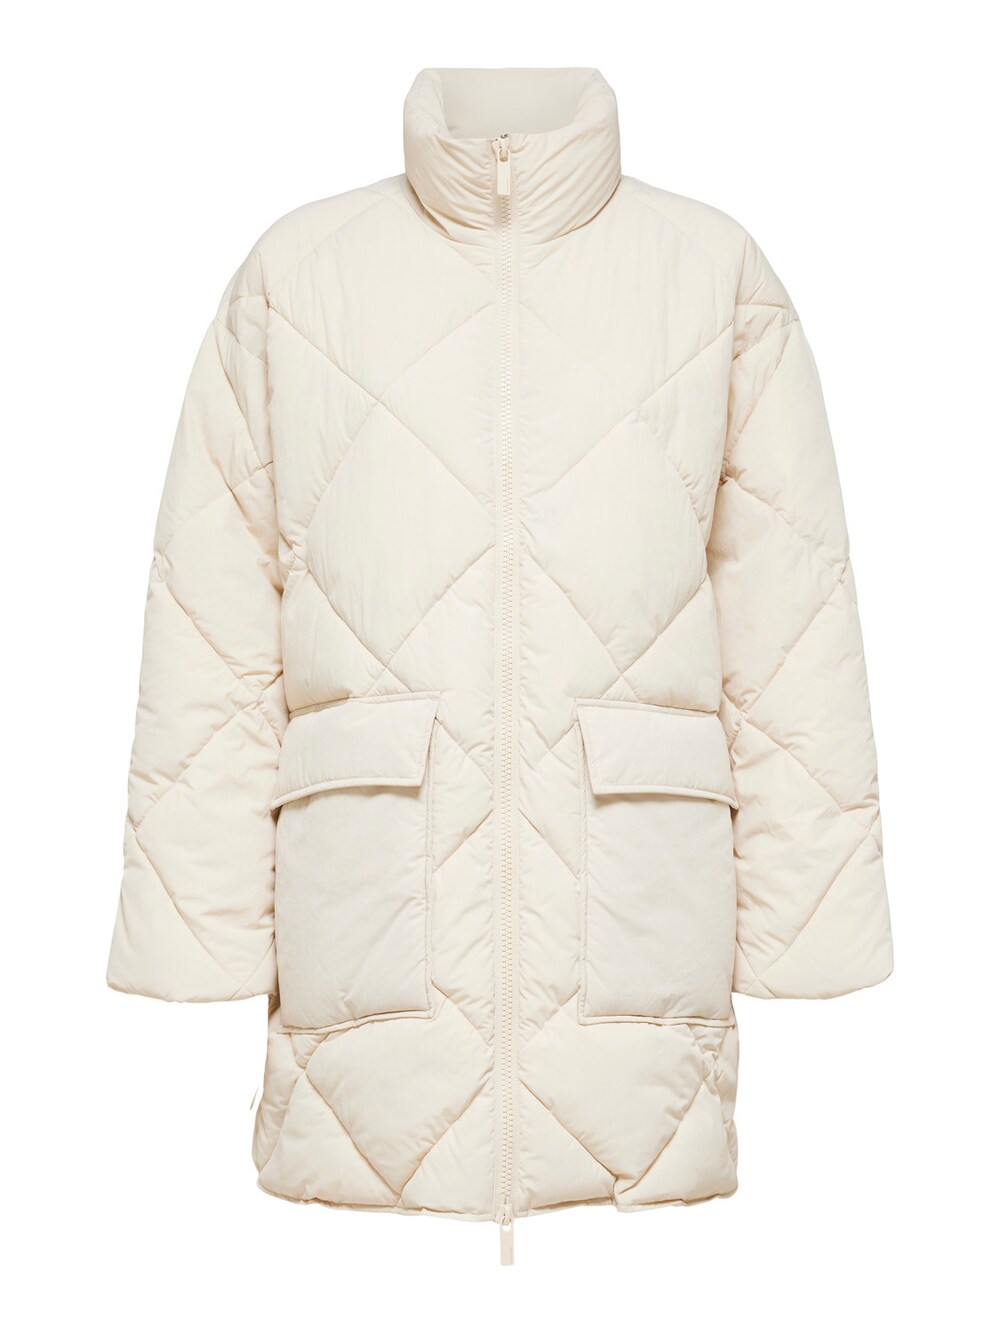 Межсезонное пальто Selected Heidi, белый межсезонное пальто selected new element черный